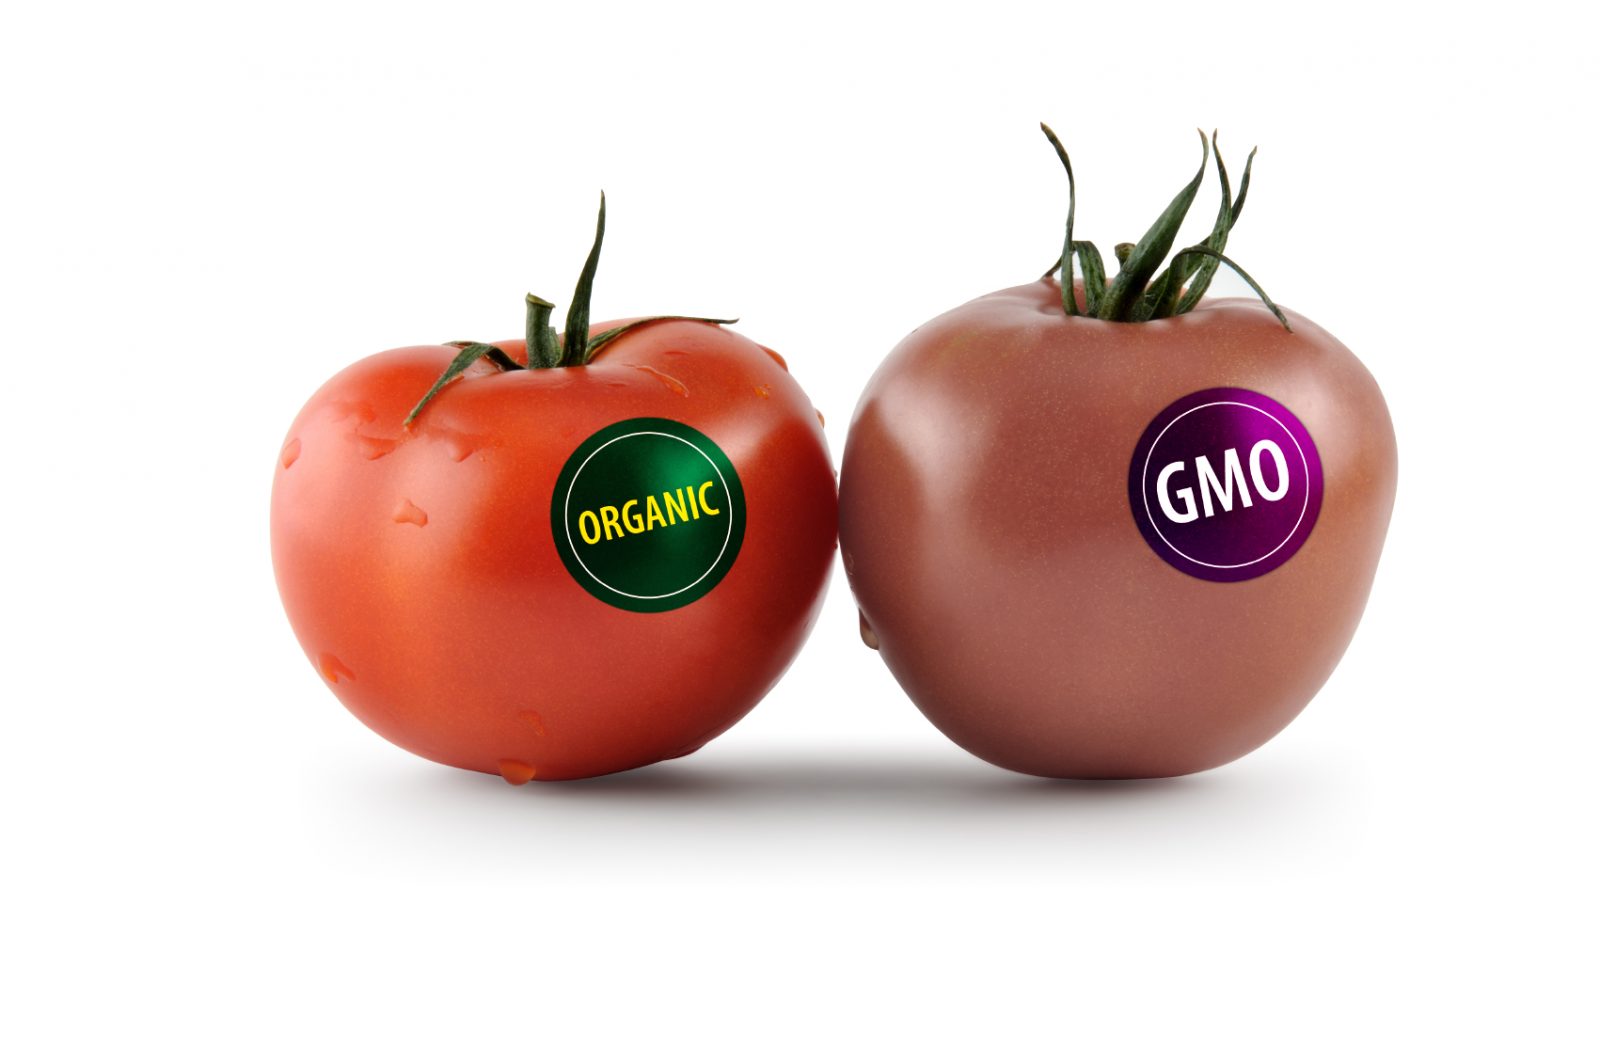 Kako razlikovati organsku od otrovne GMO hrane?